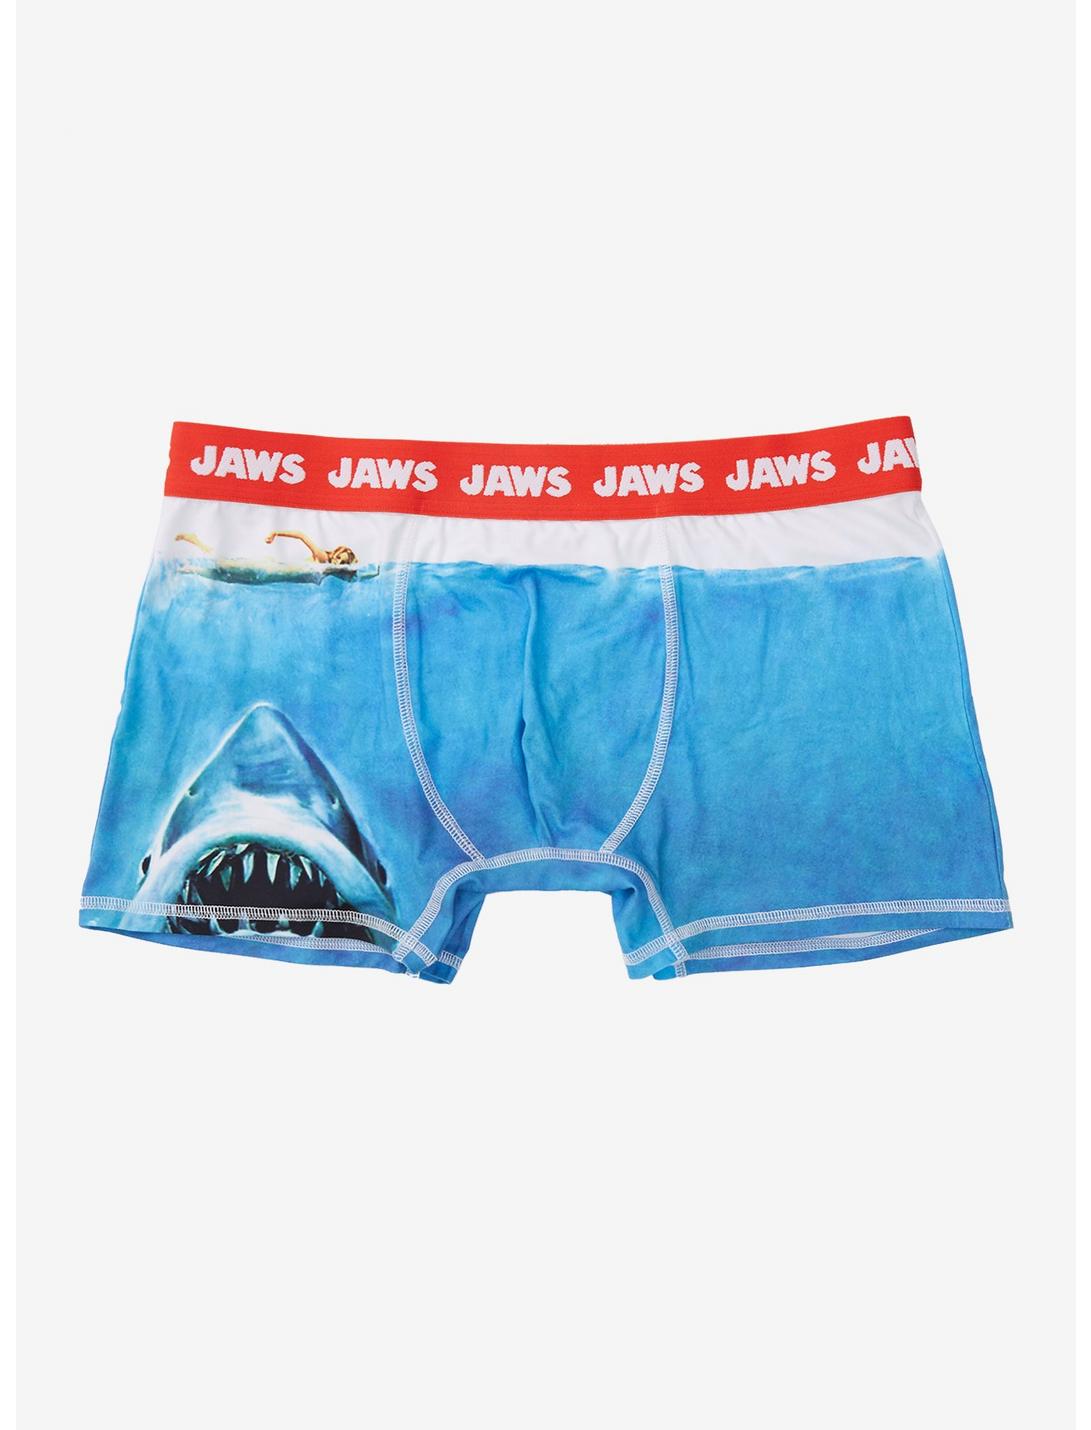 Jaws Poster Boxer Briefs, MULTI, hi-res